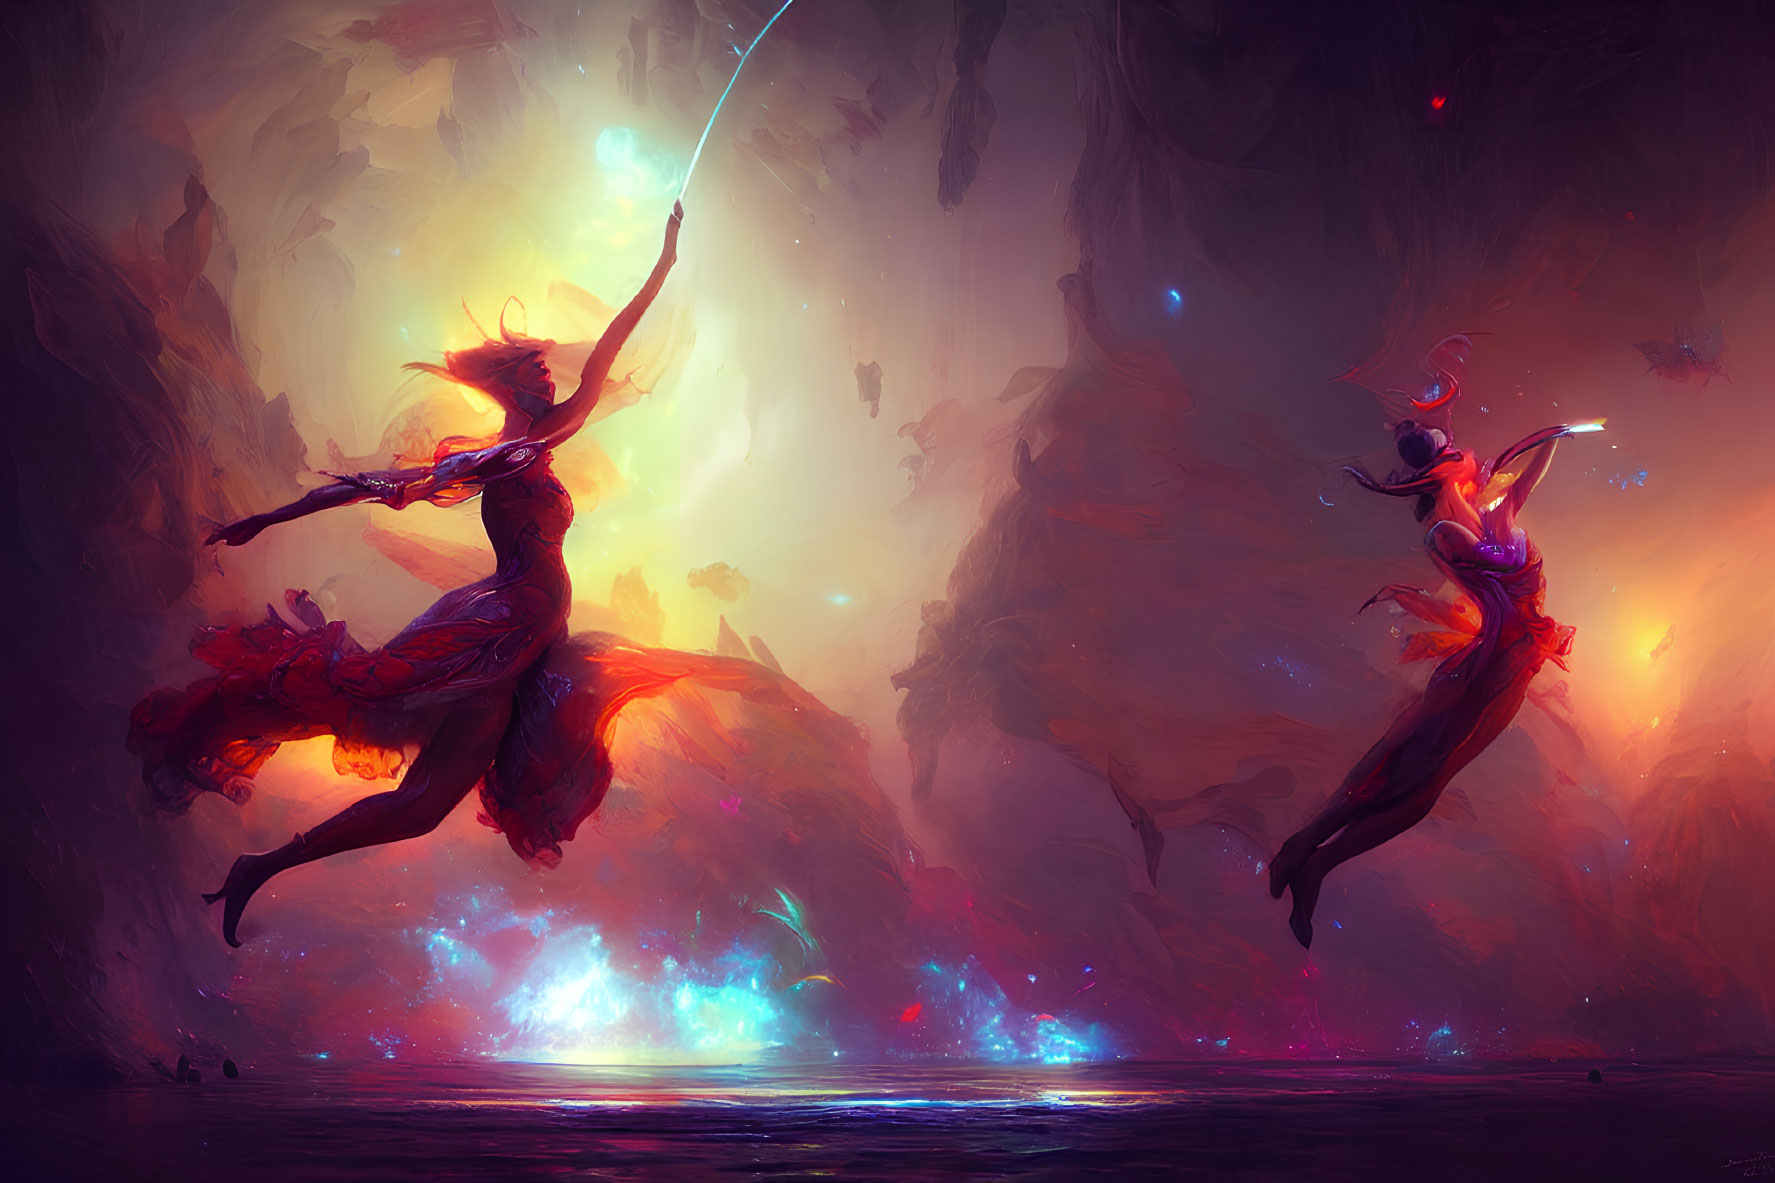 Ethereal figures dancing in glowing cave atmosphere